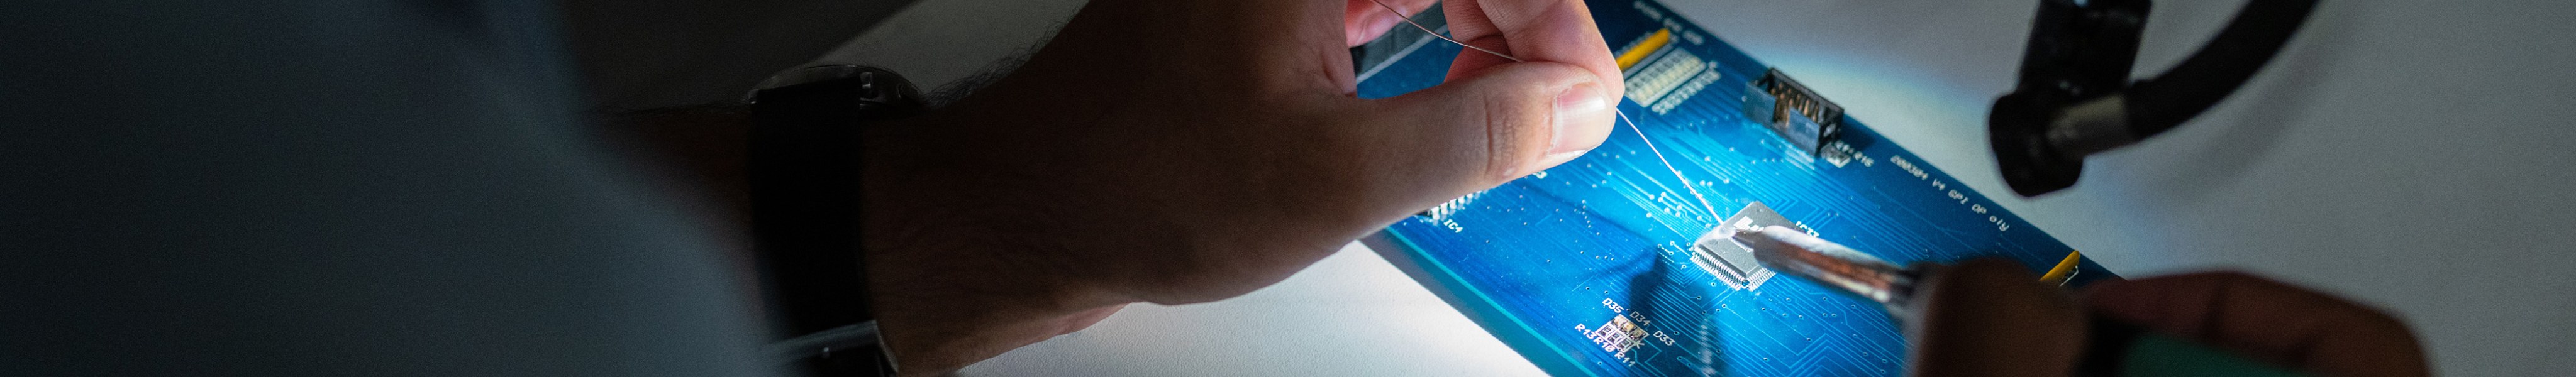 An engineer solders a blue circuit board